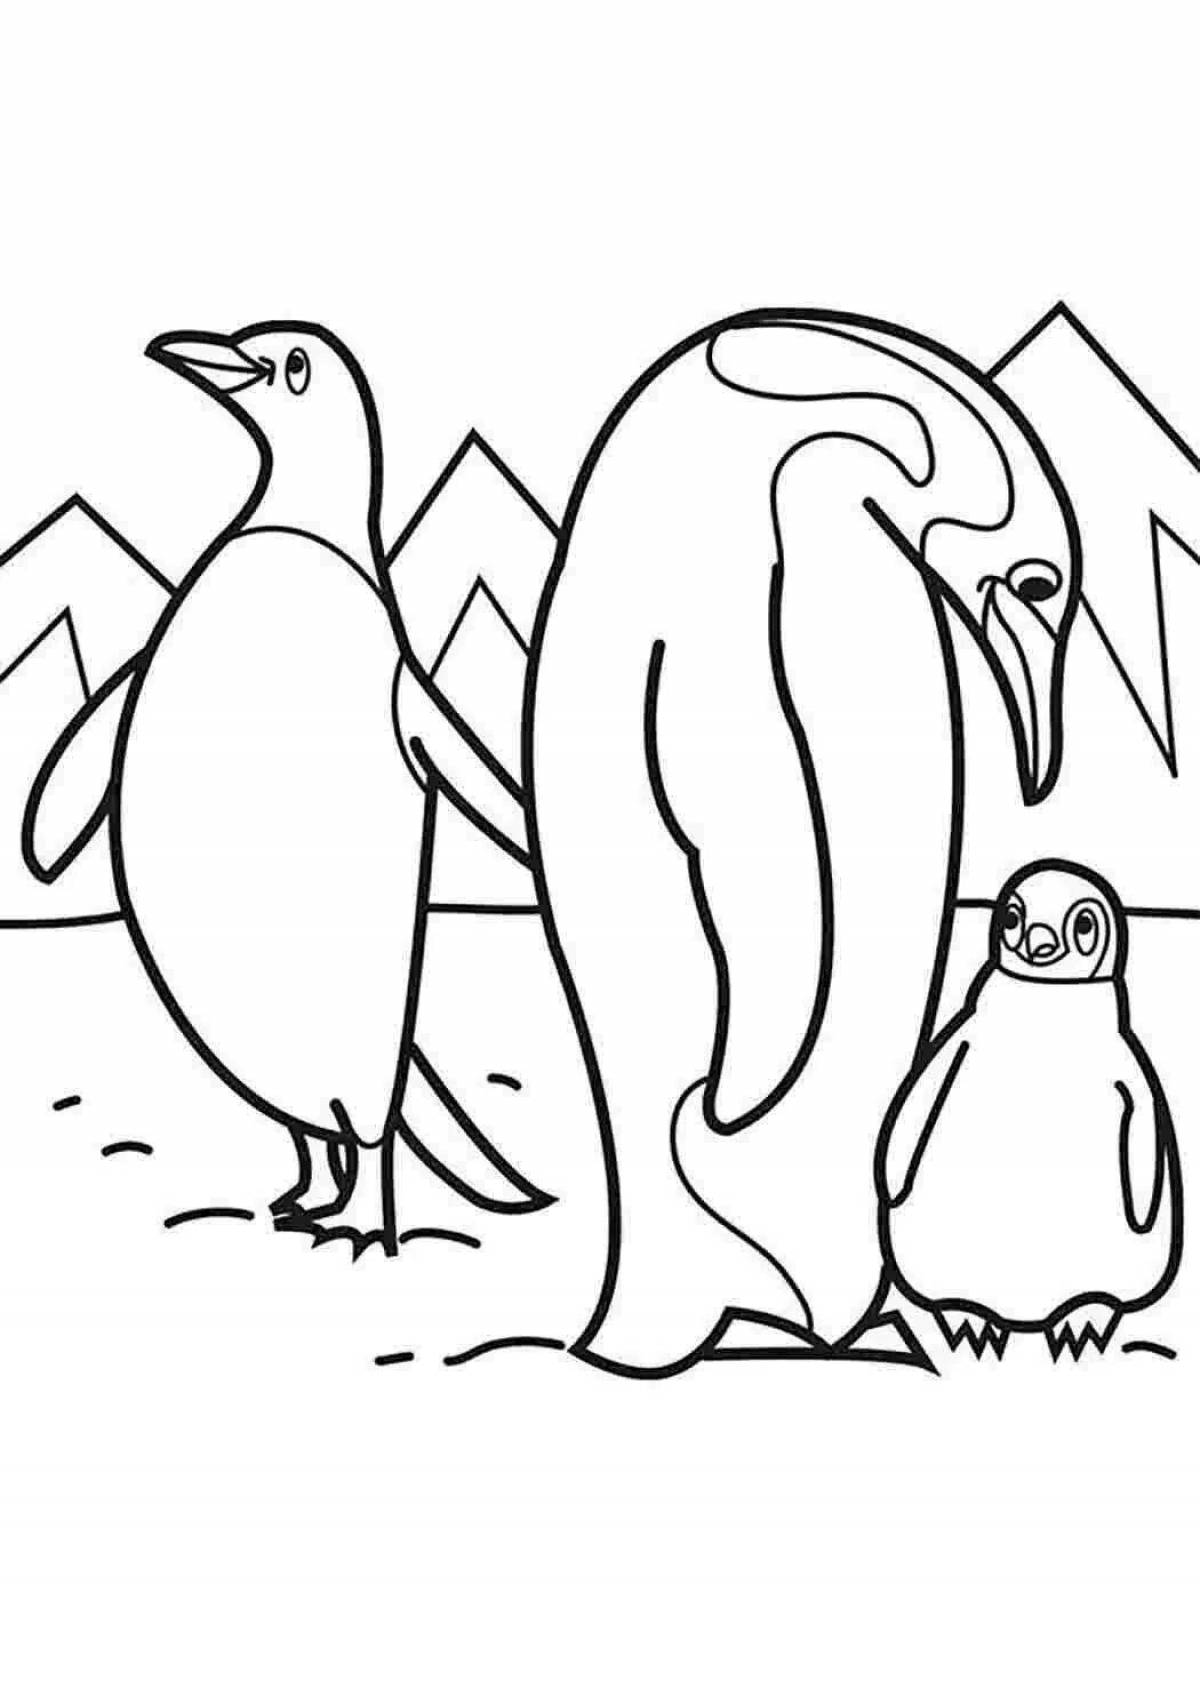 Экзотические пингвины антарктиды